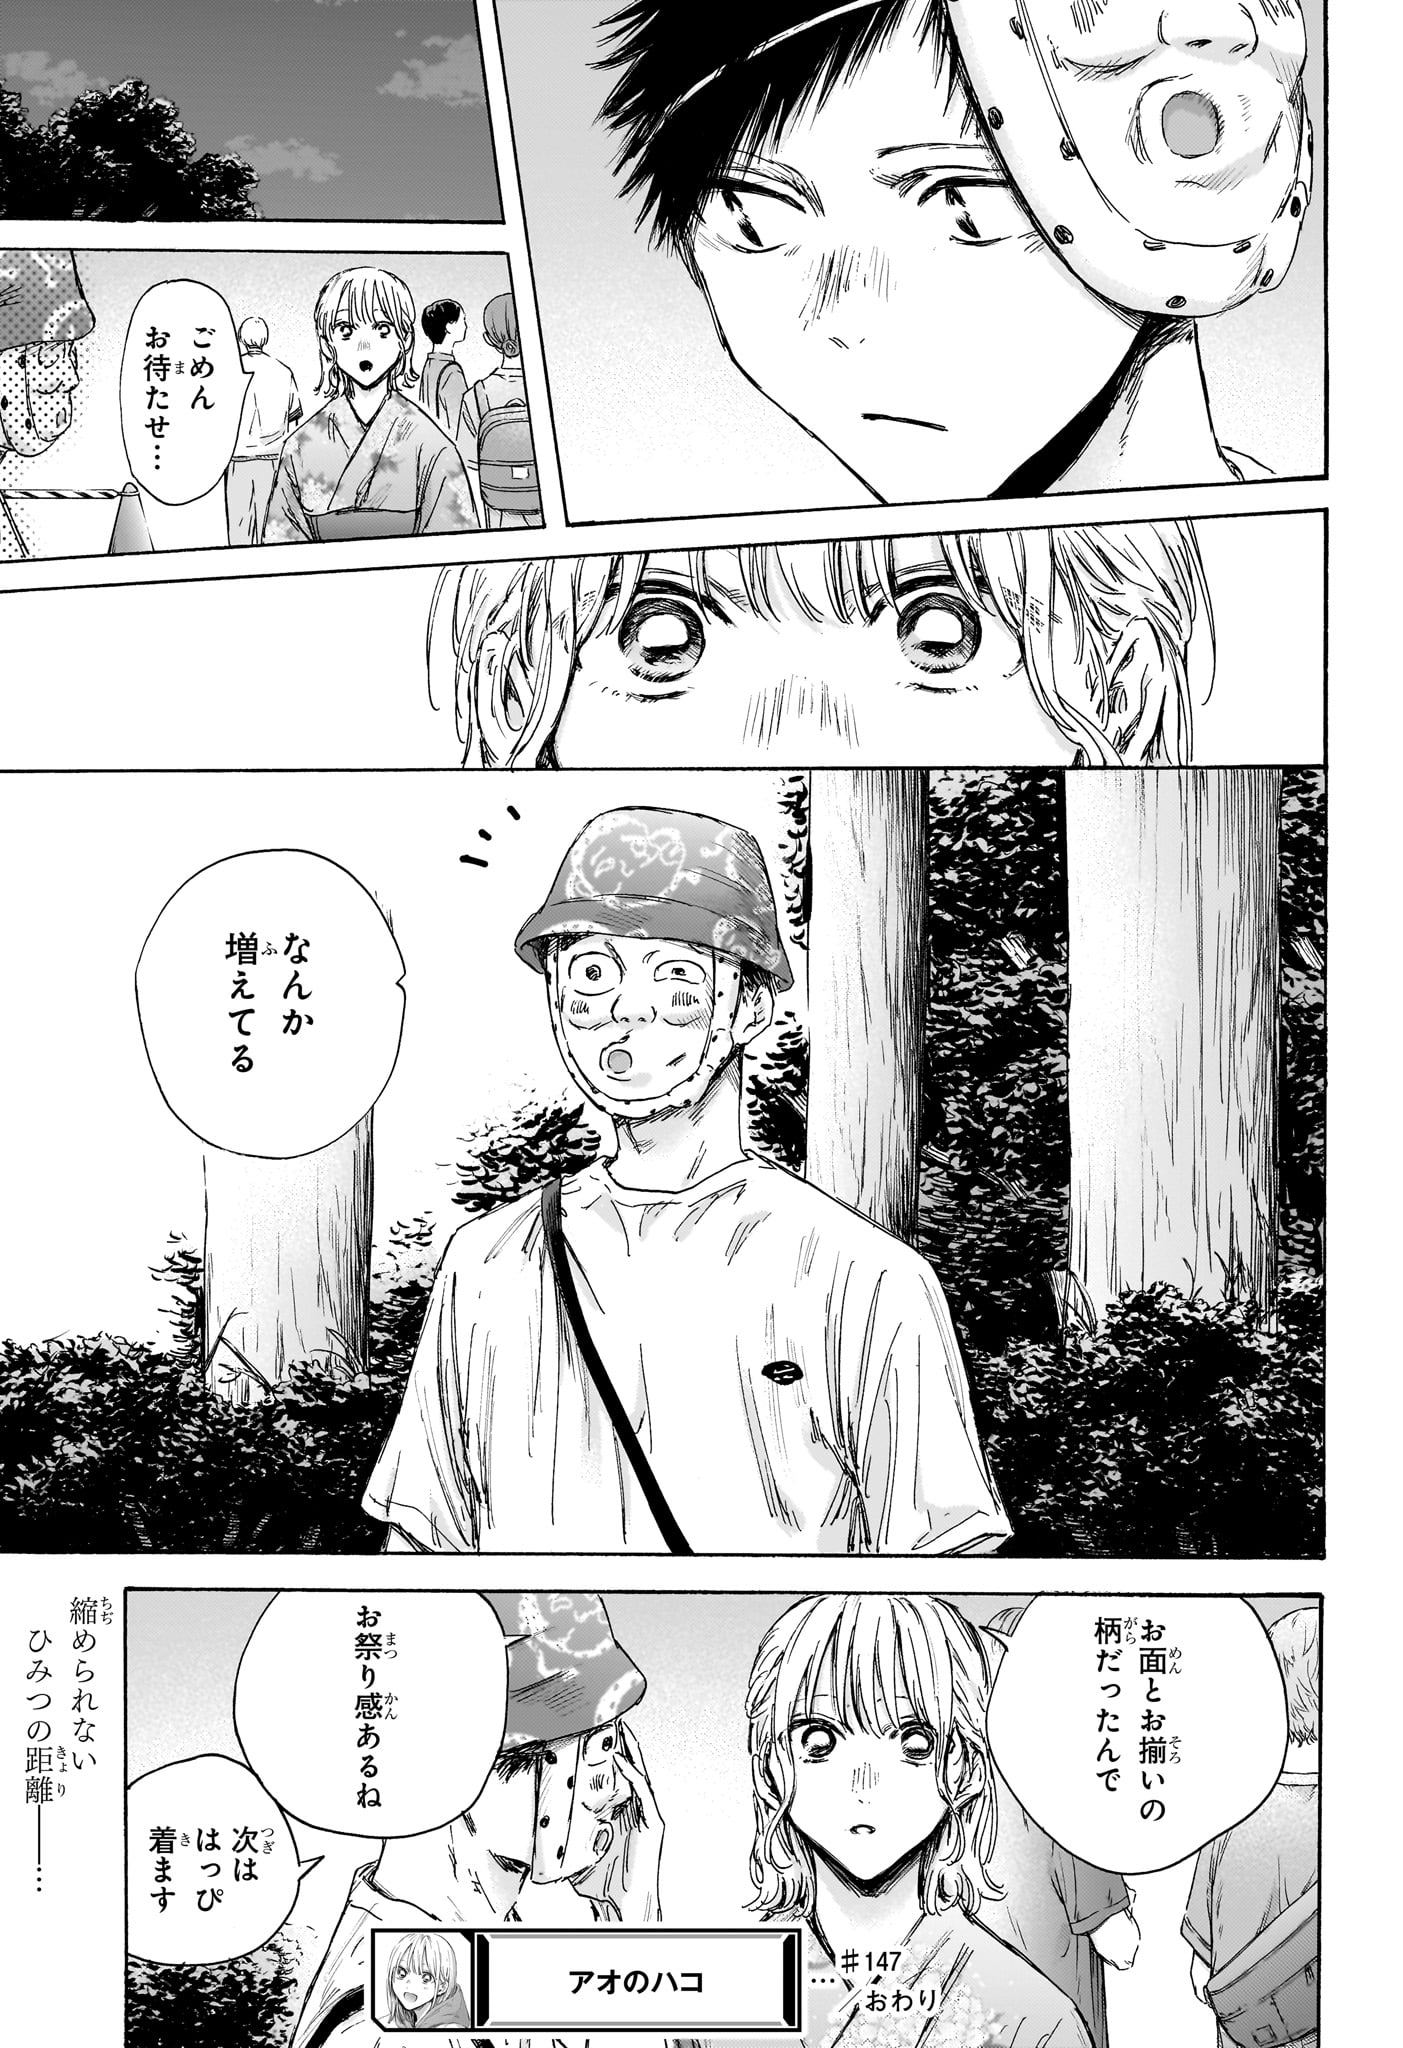 Ao no Hako - Chapter 147 - Page 19